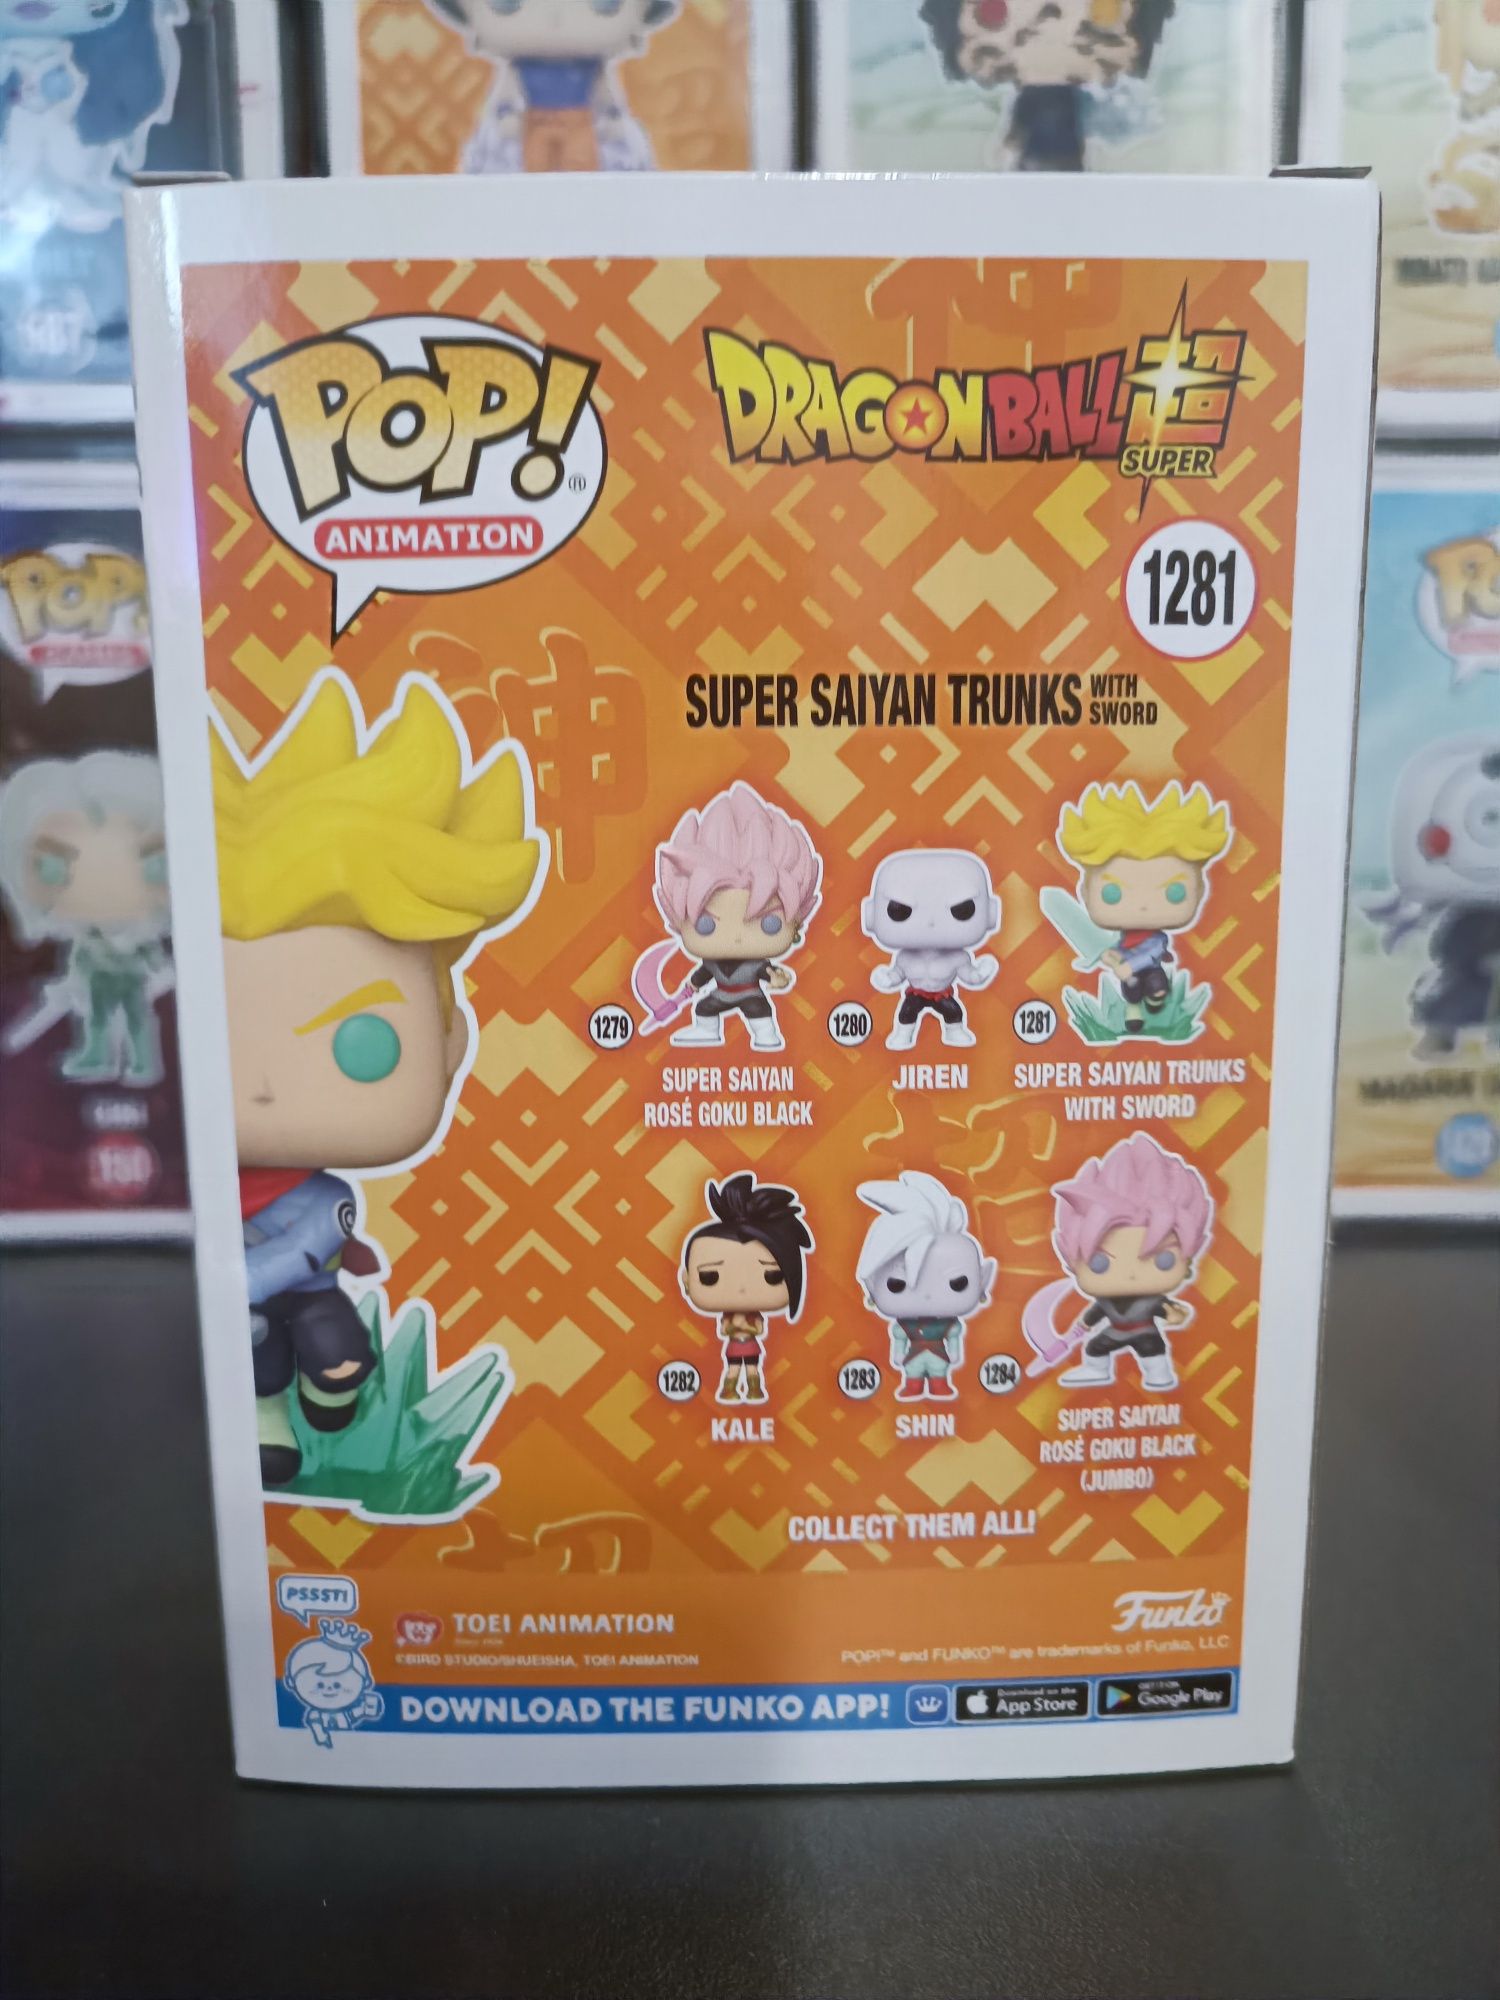 Funko Pop Dragon Ball Super Saiyan Trunks with Sword 1281 Glow